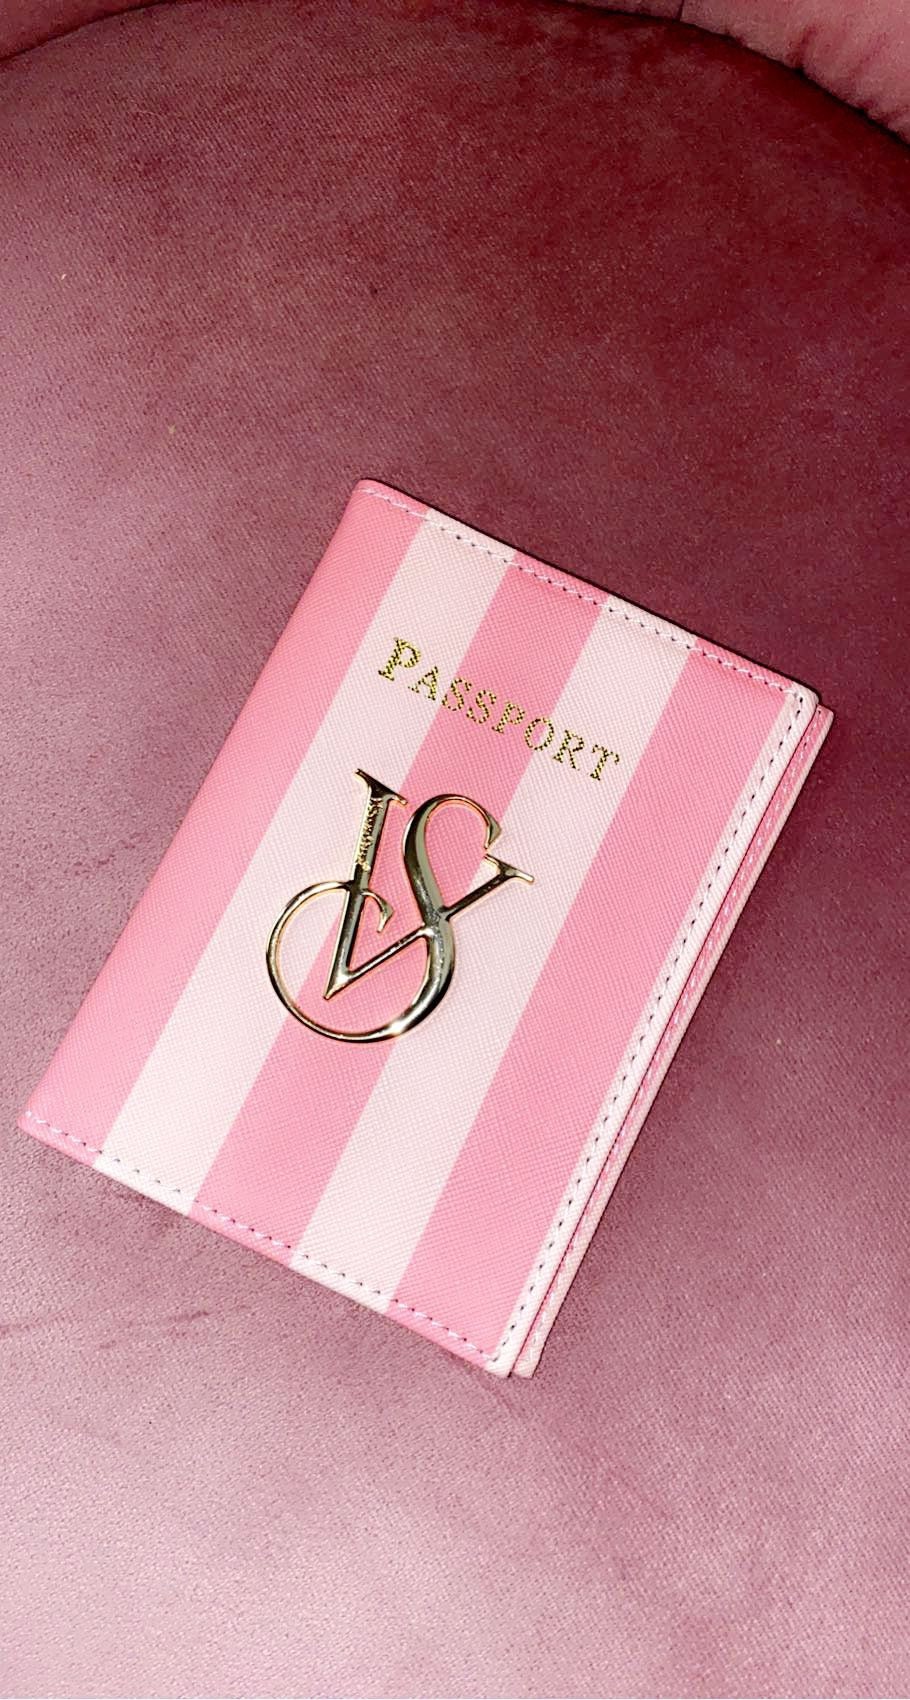 Victoria Secret Passport Holder Holders Bag VS Travel Passport Cover Case